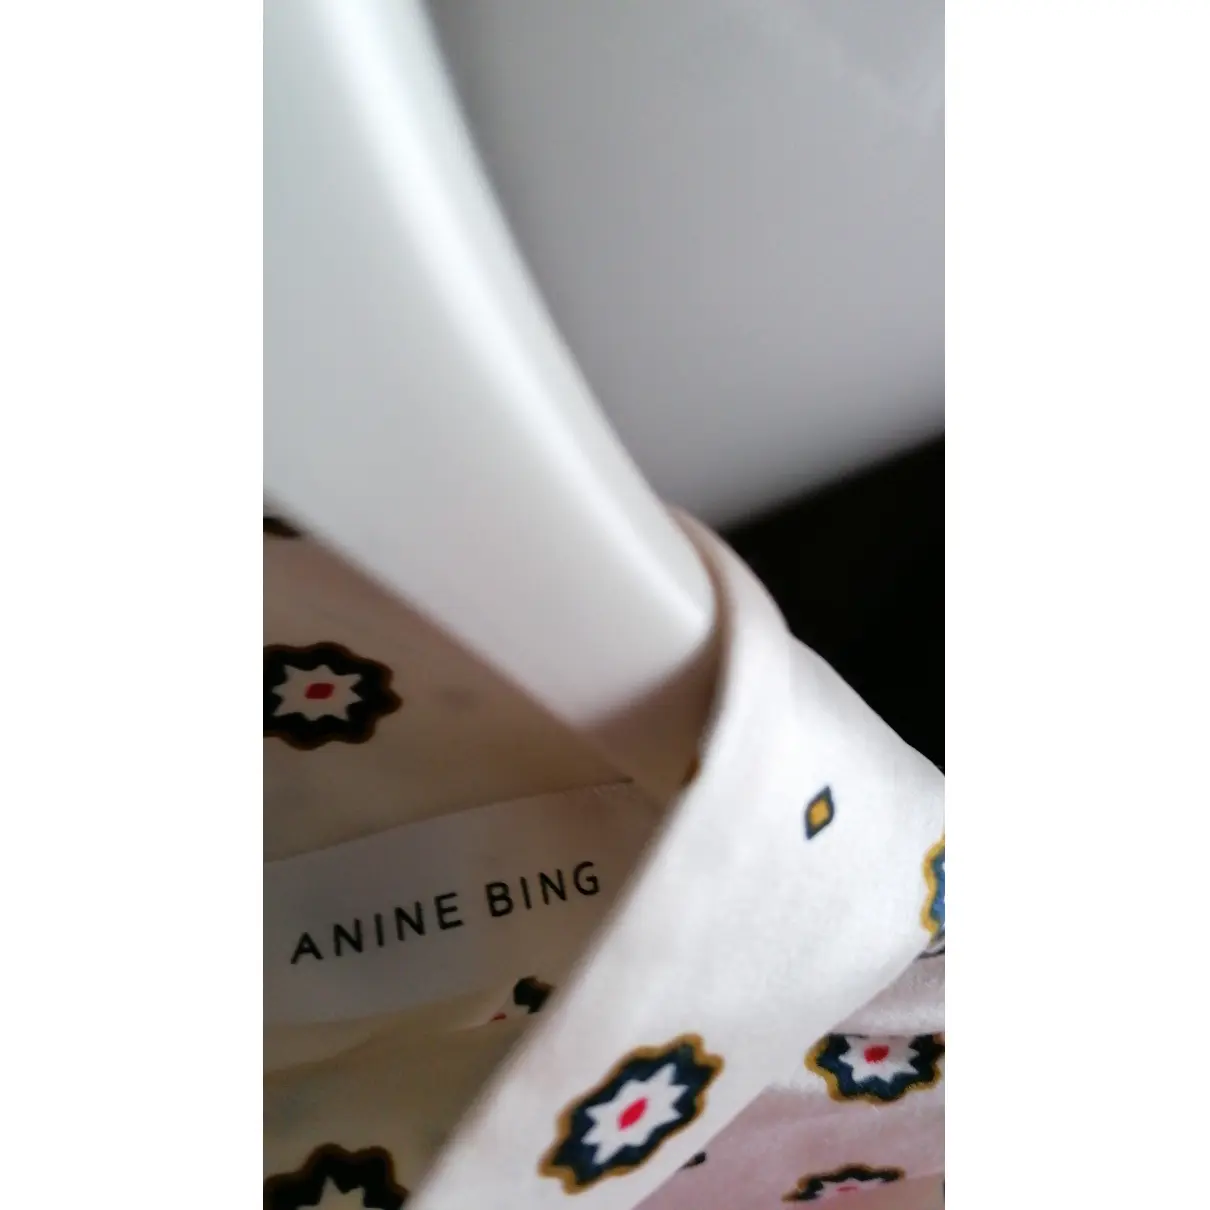 Buy Anine Bing Spring Summer 2019 silk blouse online